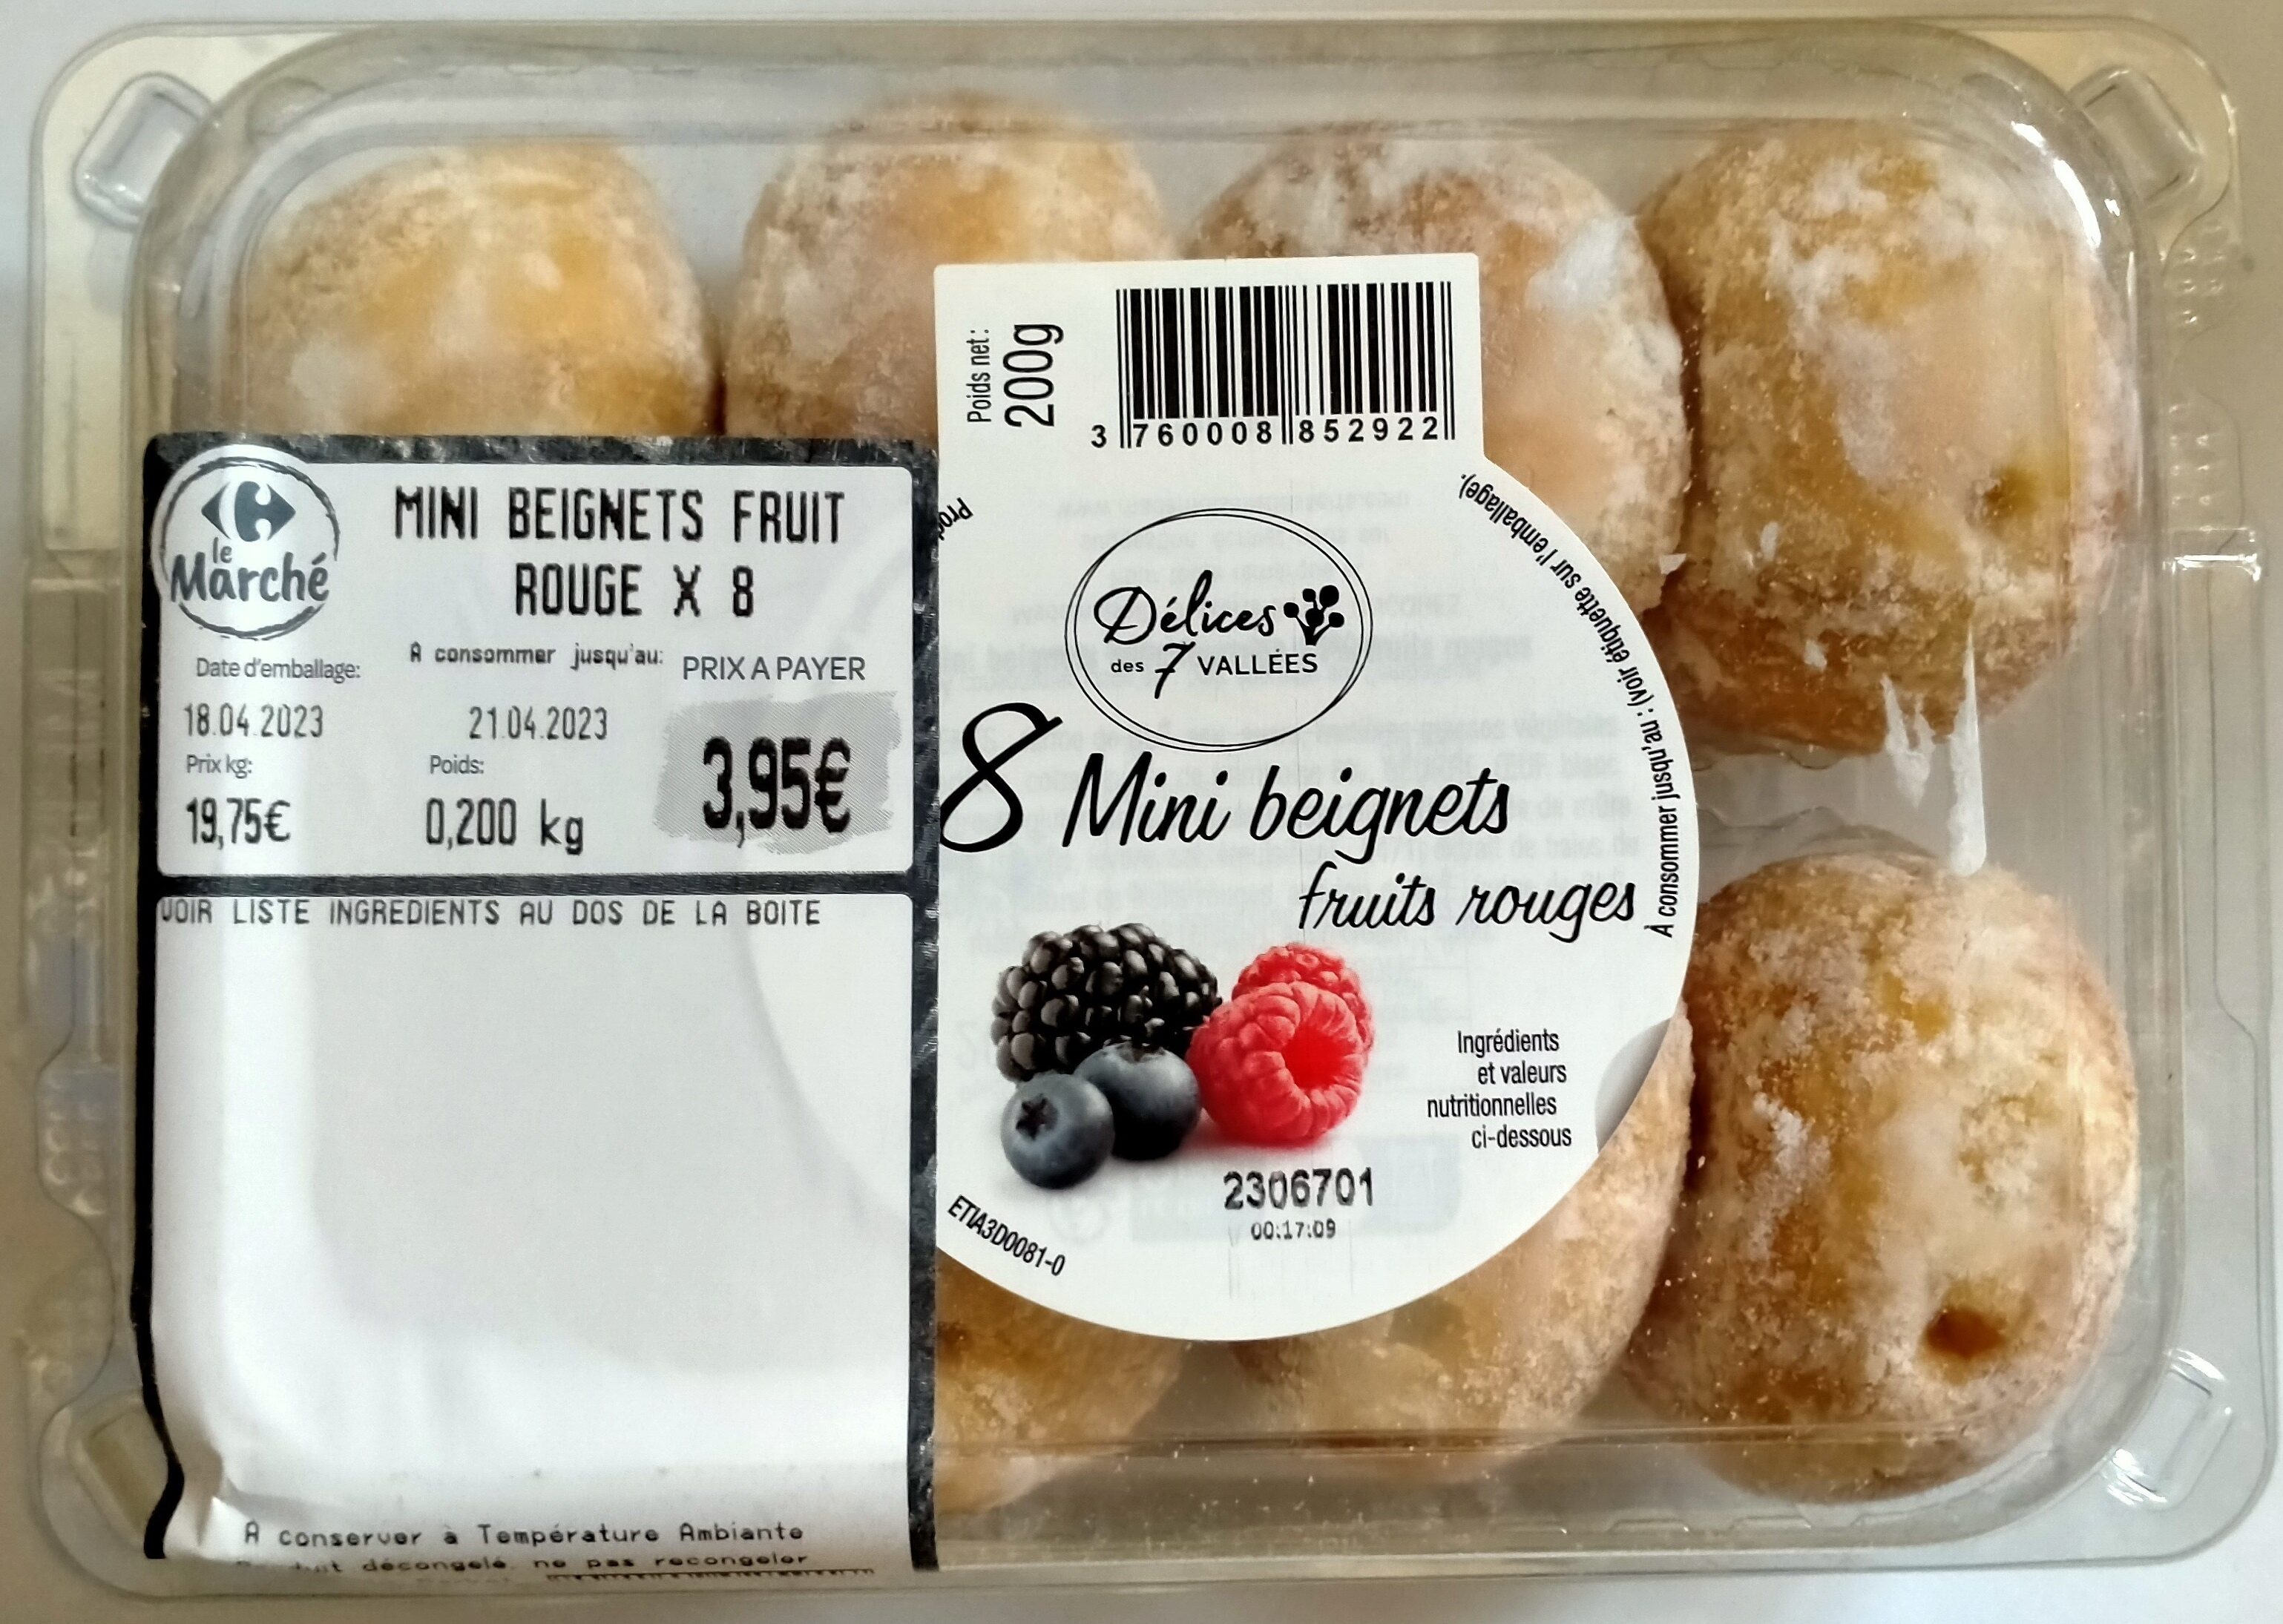 8 mini beignets fruits rouges - Product - fr